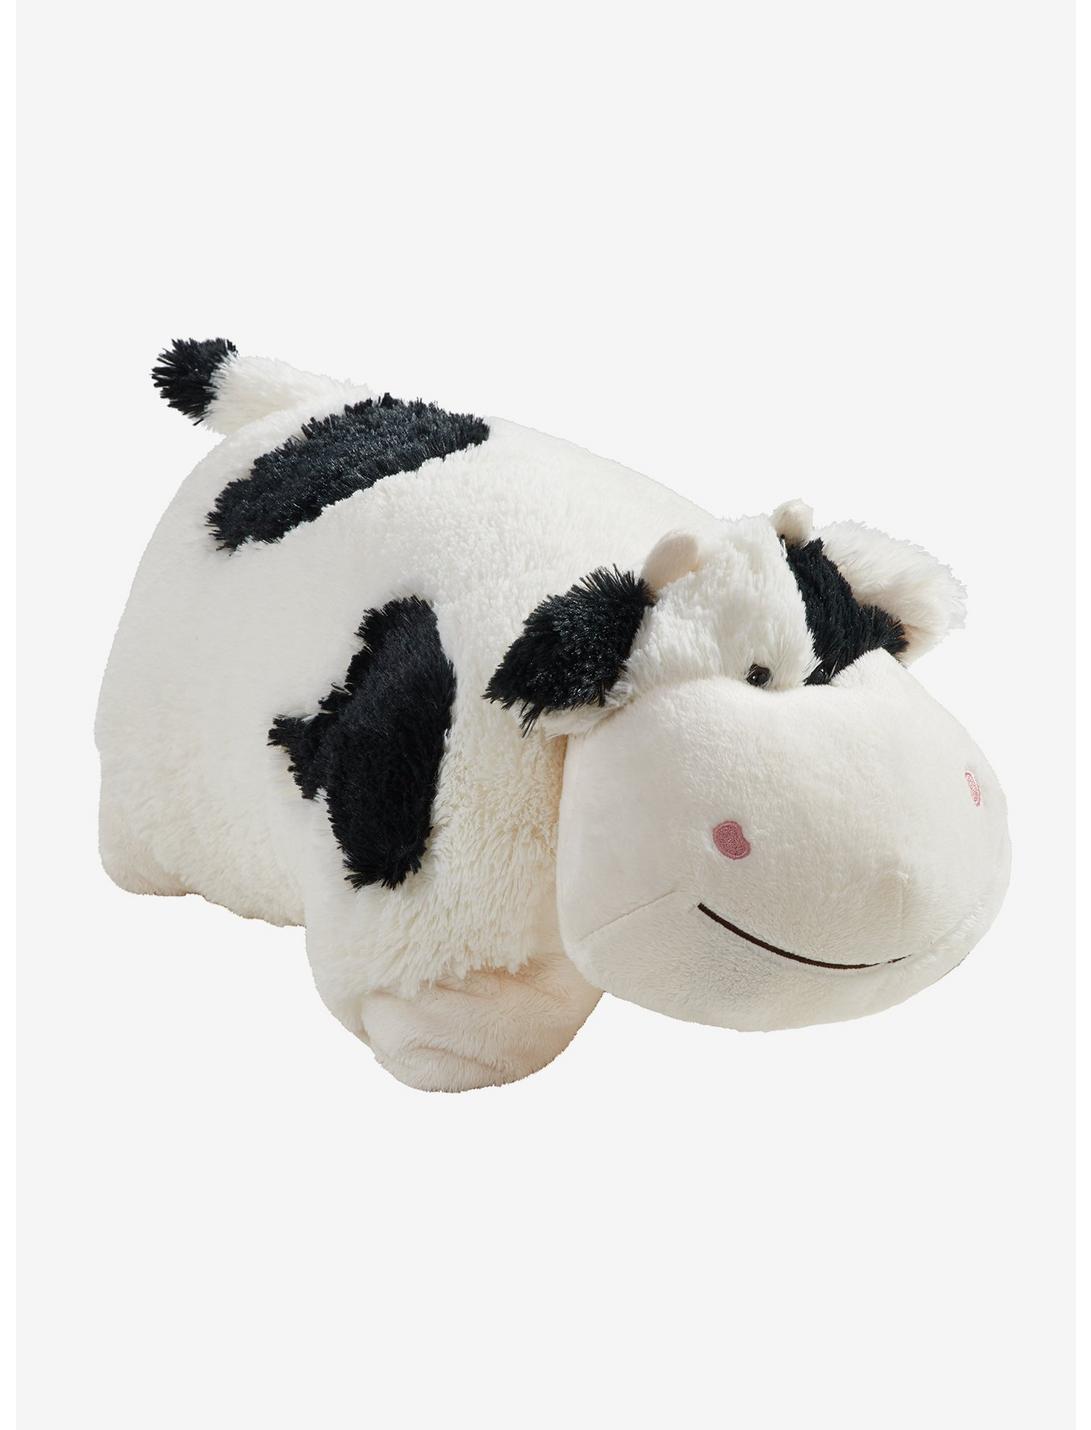 Jumboz Cozy Cow Pillow Pets Plush Toy, , hi-res